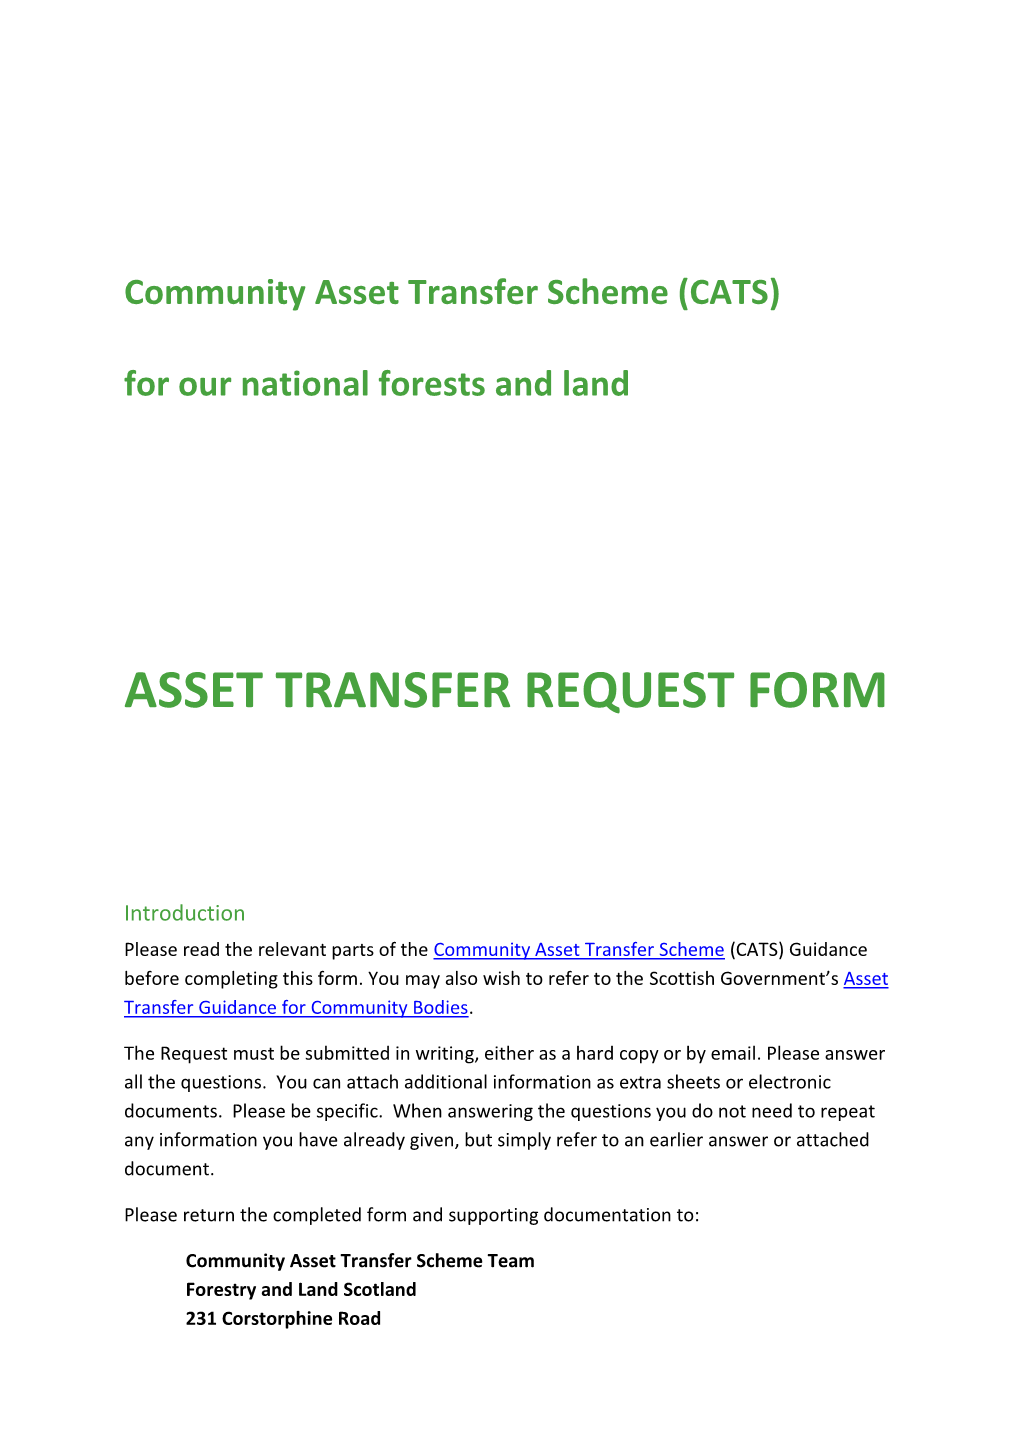 Asset Transfer Request Form